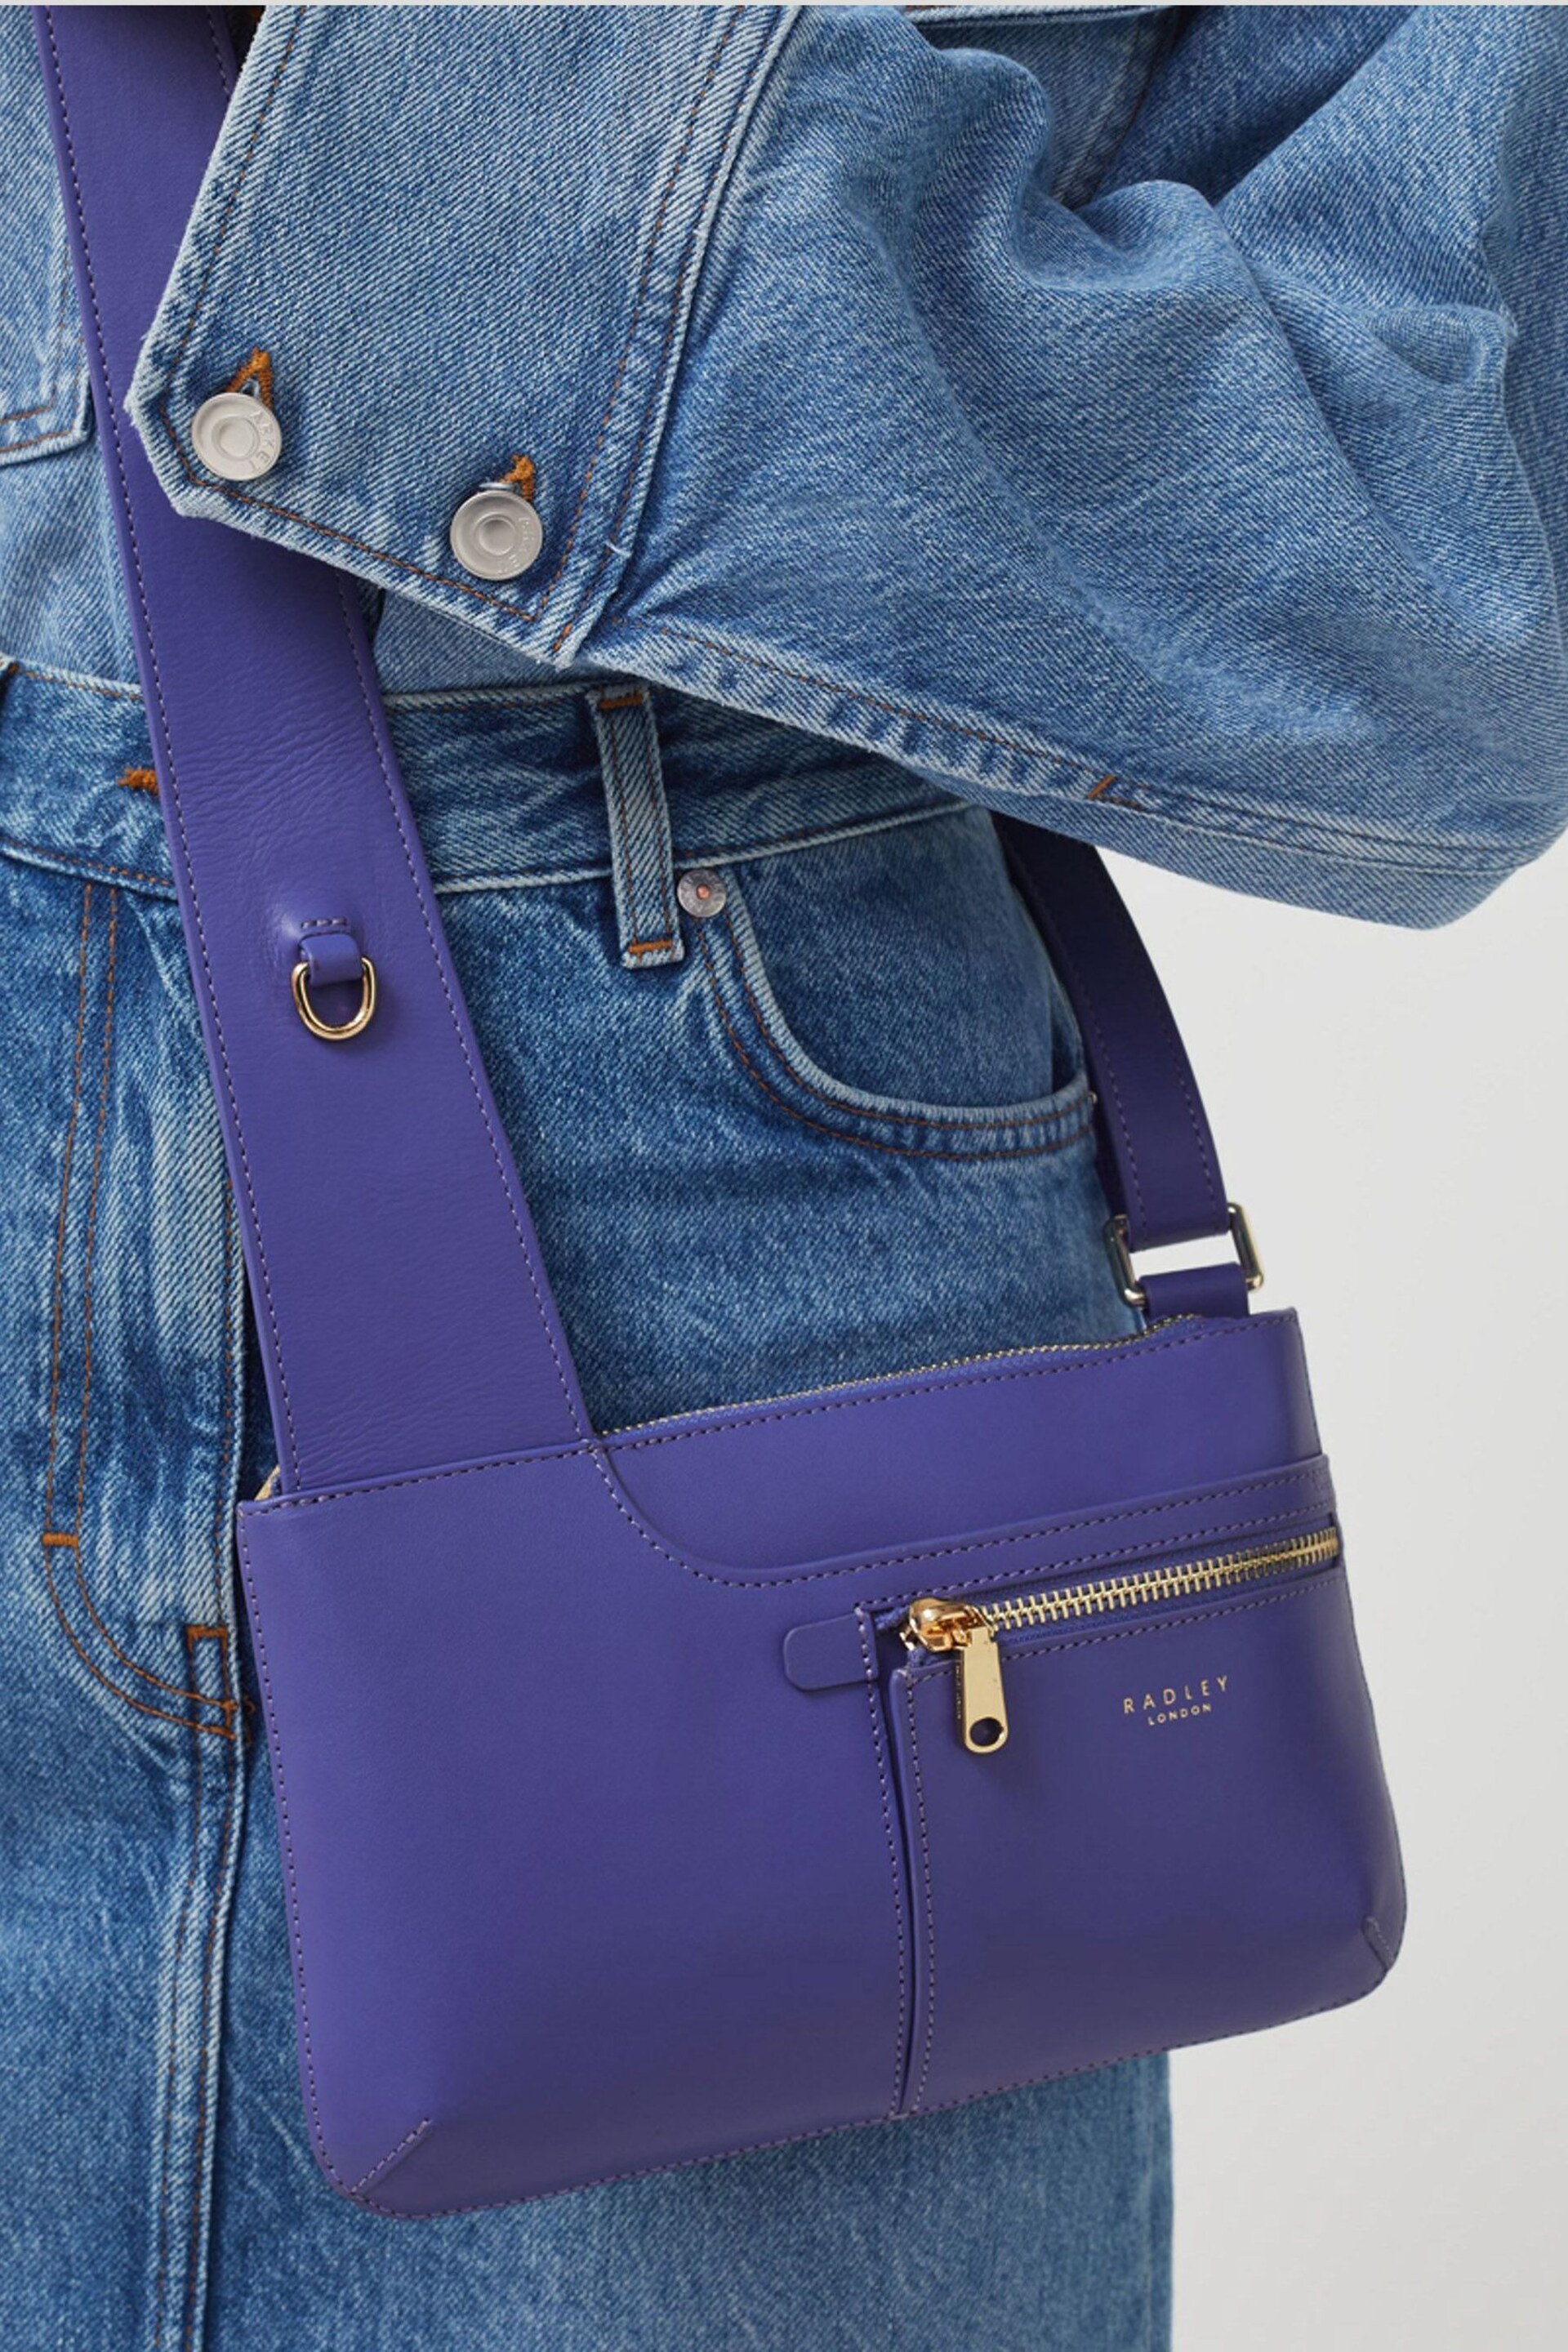 Radley London Purple Pockets Icon Mini Zip-Top Cross-Body Bag - Image 1 of 5